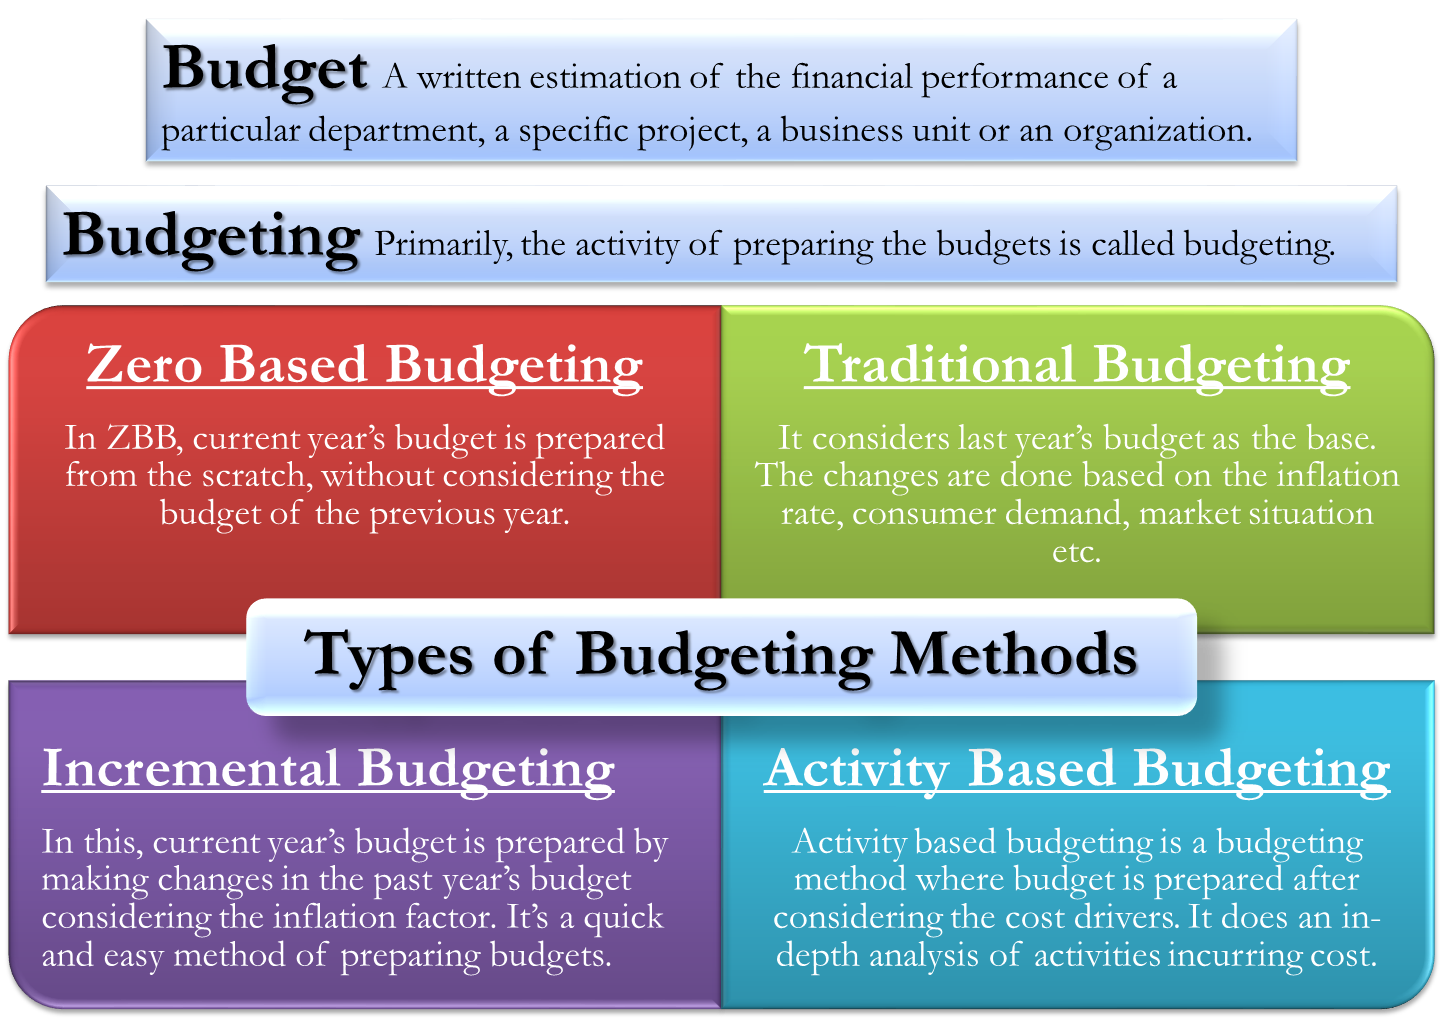 program based budgeting approach